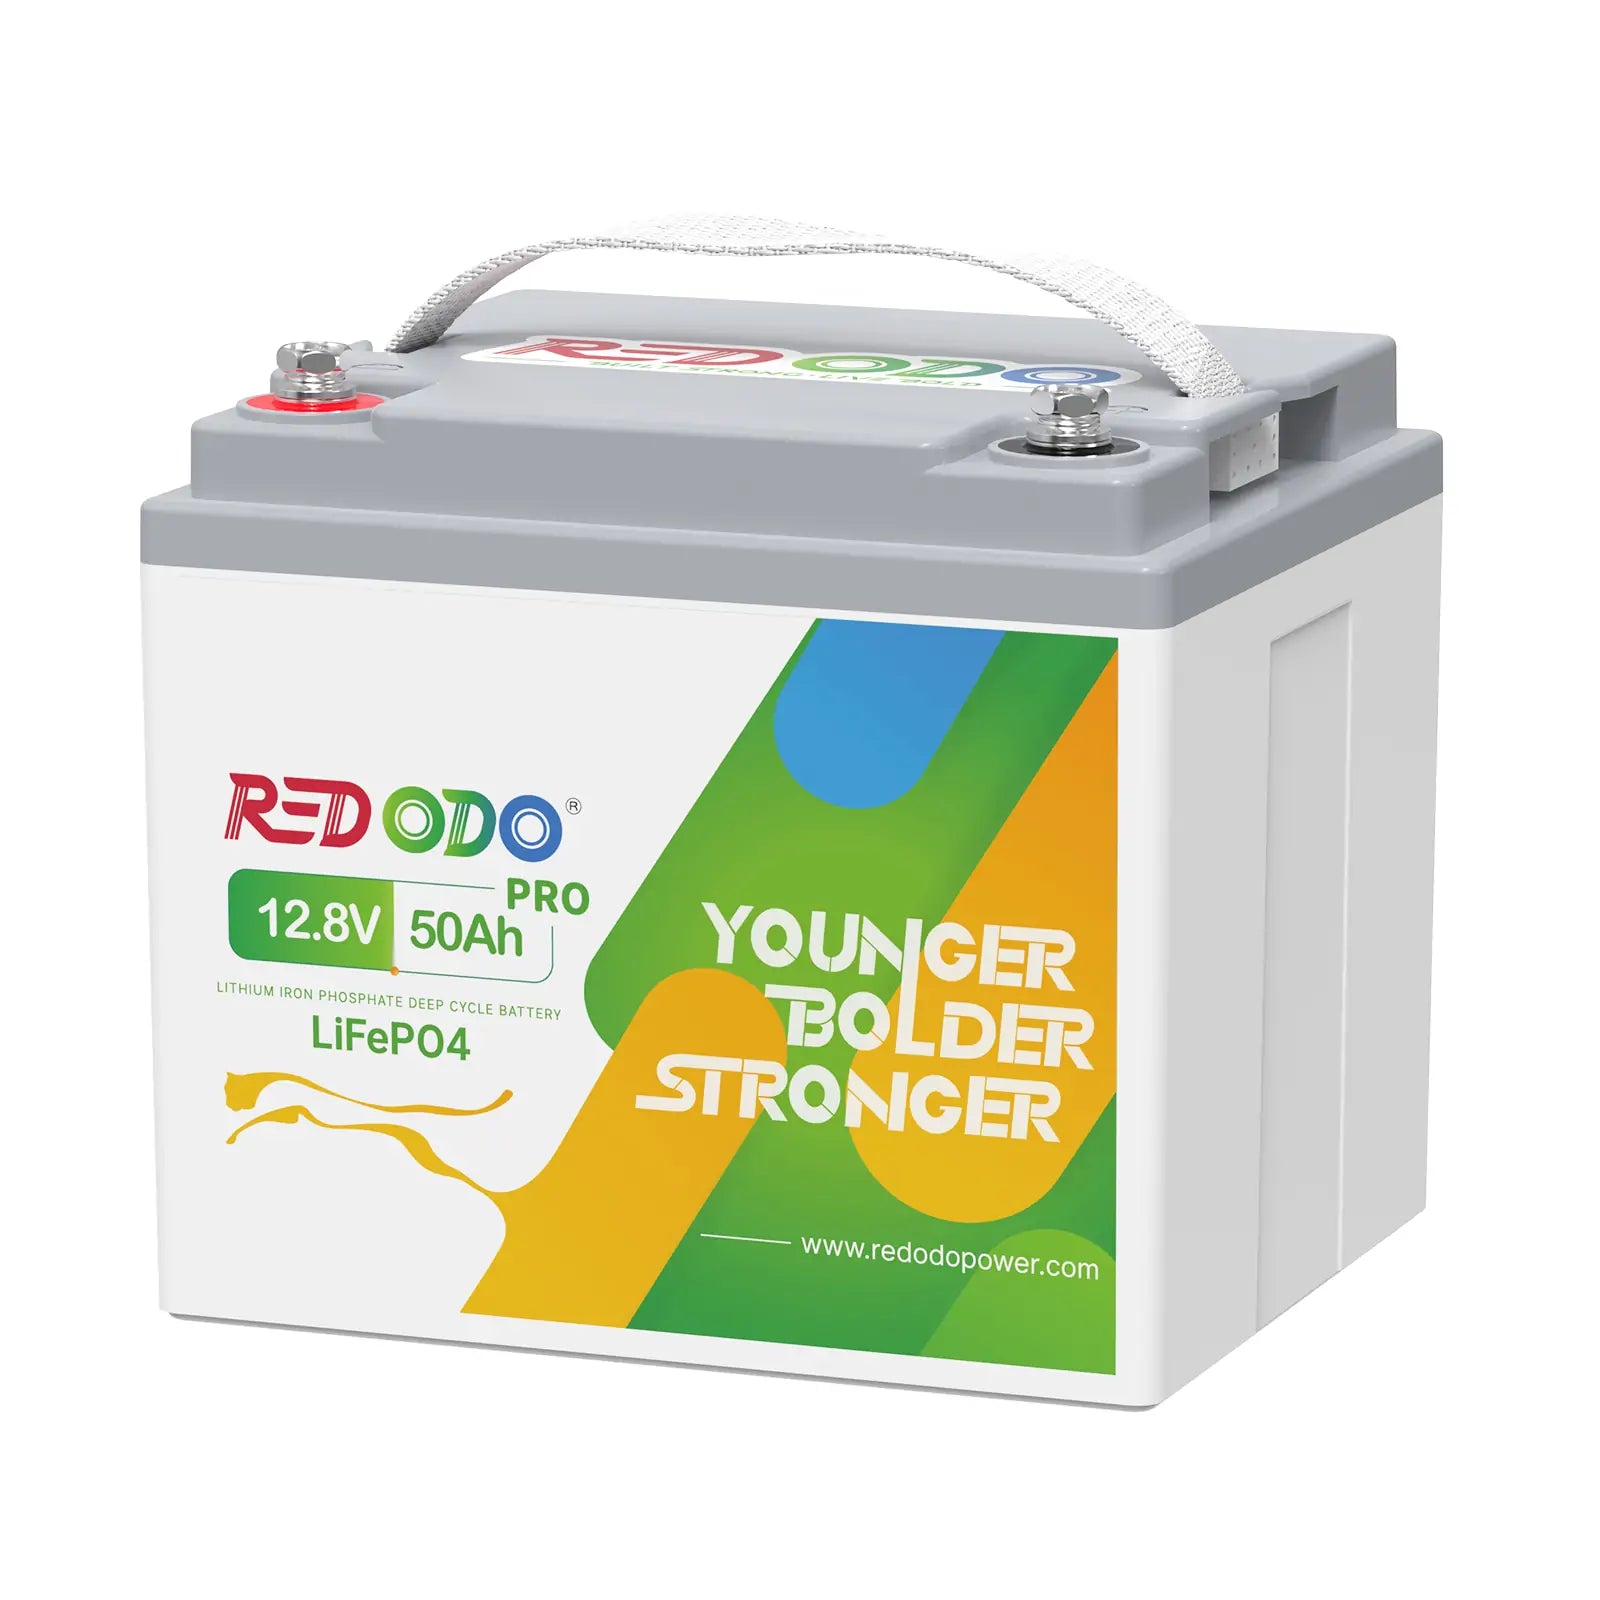 Redodo 12V 50Ah pro lithium battery 12v 50ah rechargeable battery-1.webp__PID:4cd6d94c-b656-4910-9923-82621dab185e